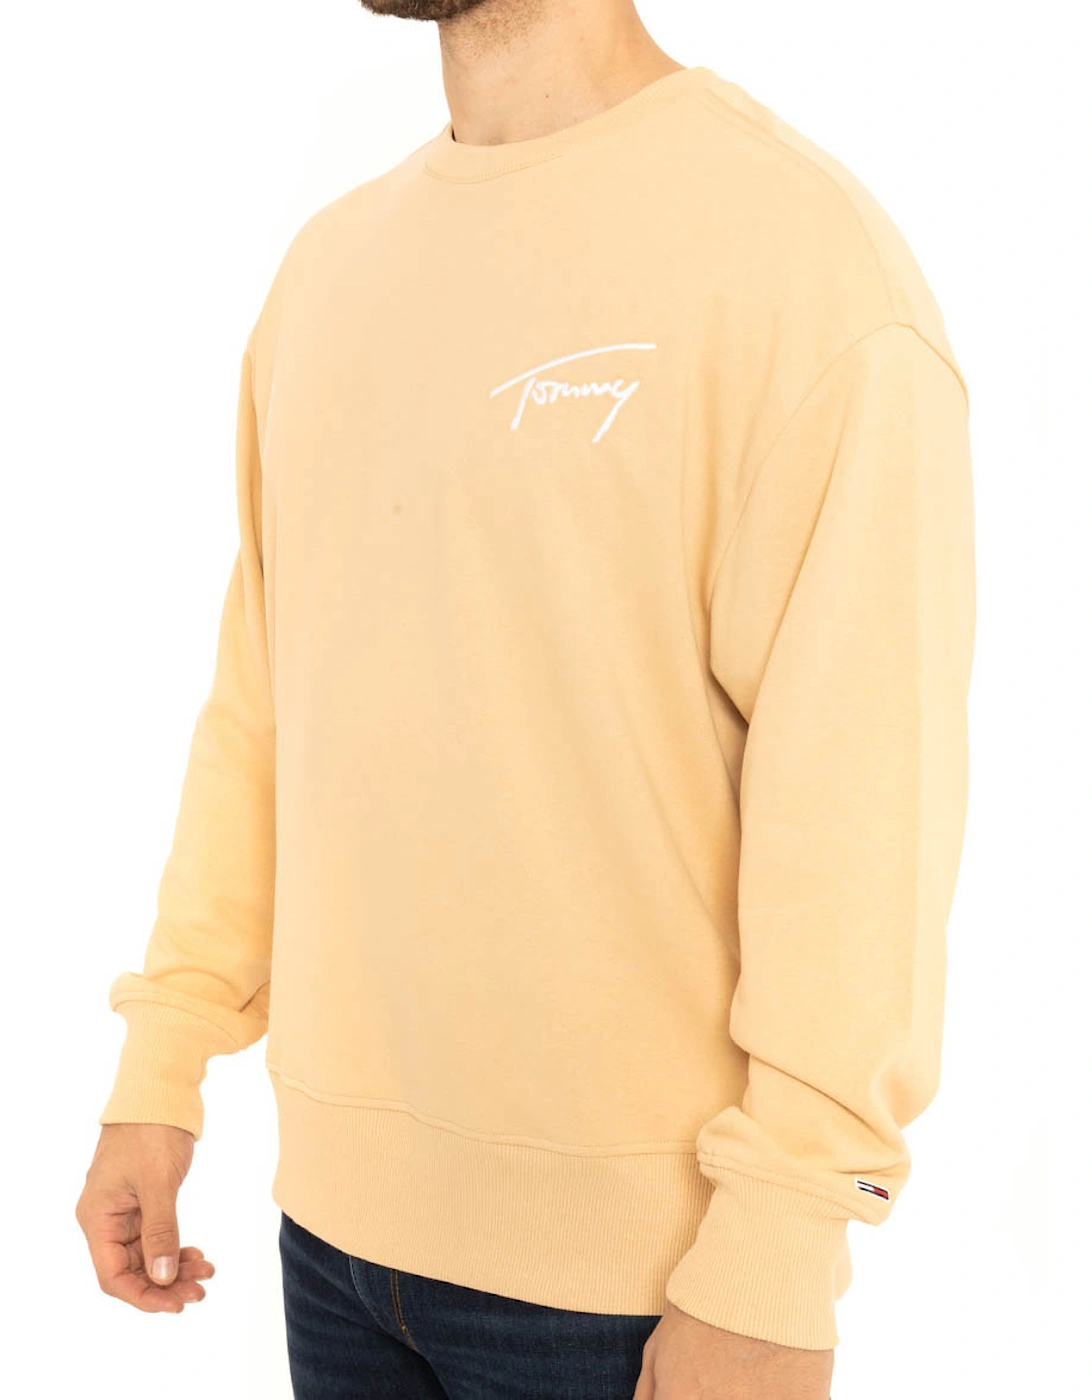 Mens Signature Sweatshirt (Mustard)